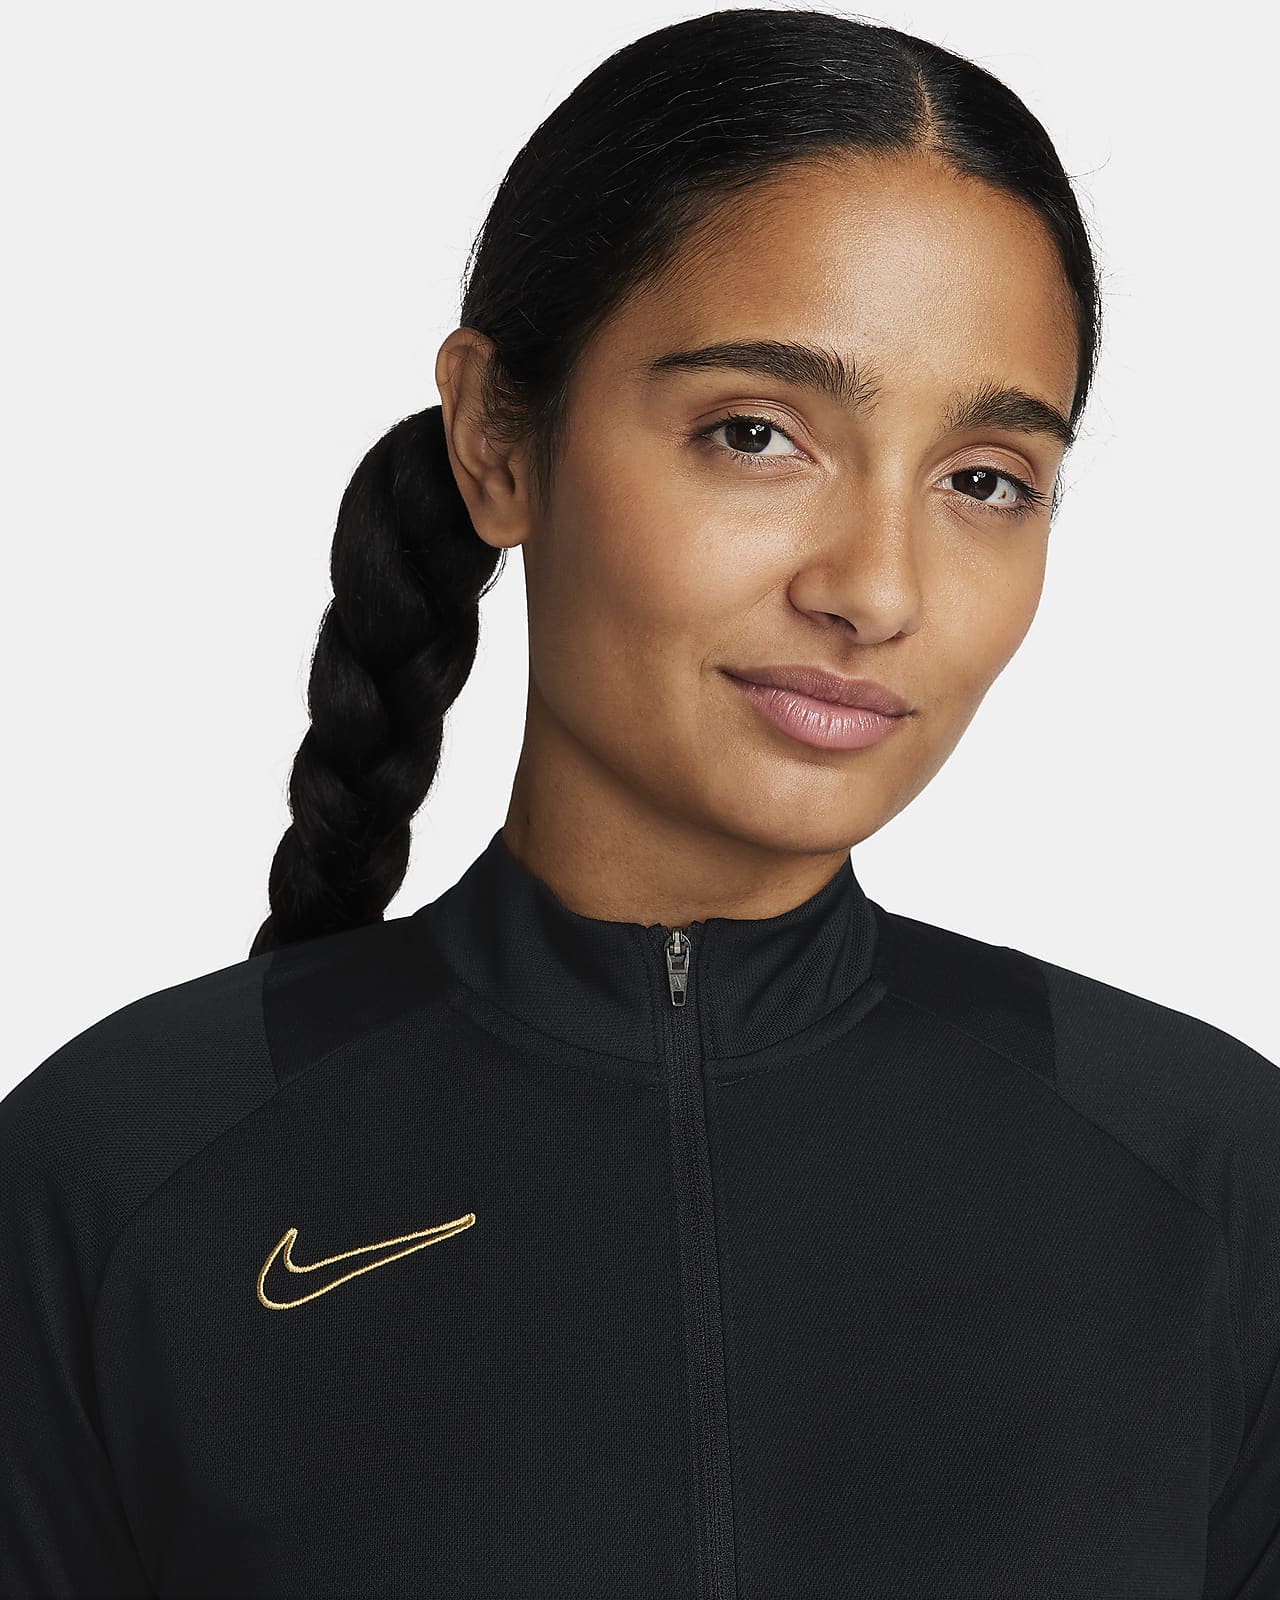 Nike Yoga Dri-fit Women's Jumpsuit - Fitness Tracksuits